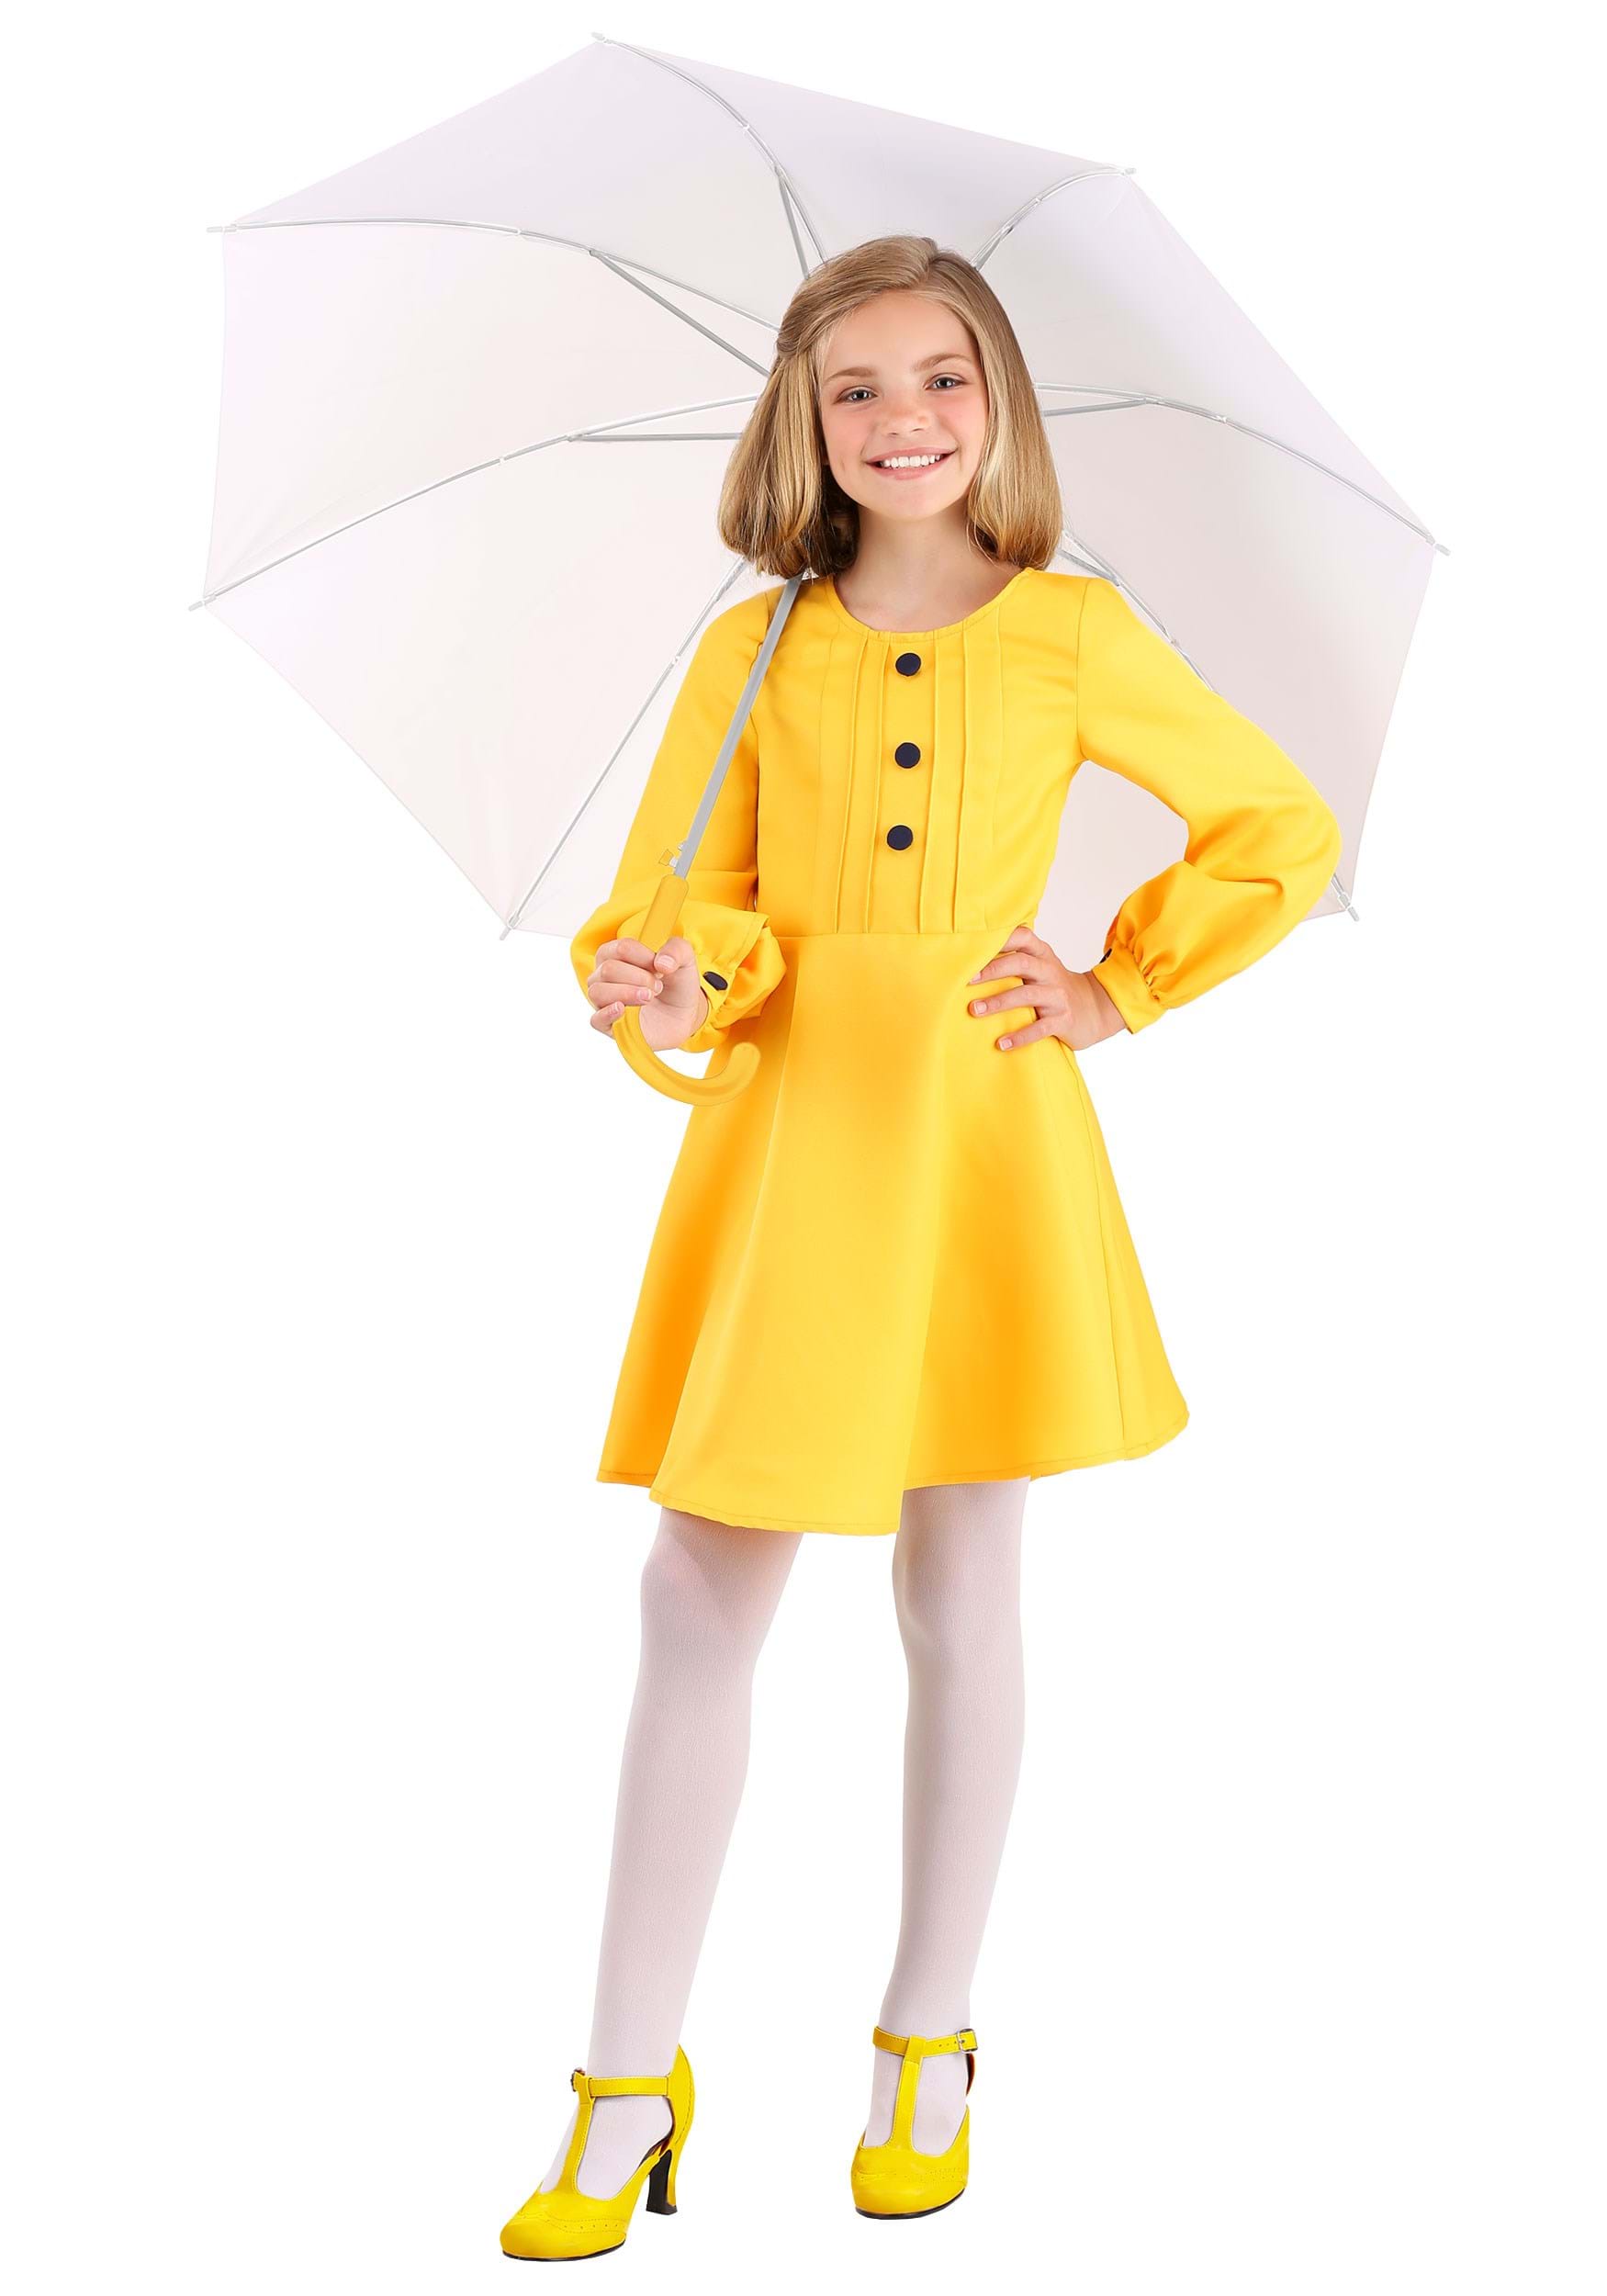 Photos - Fancy Dress FUN Costumes Morton Salt Girl Kid's Costume As Shown